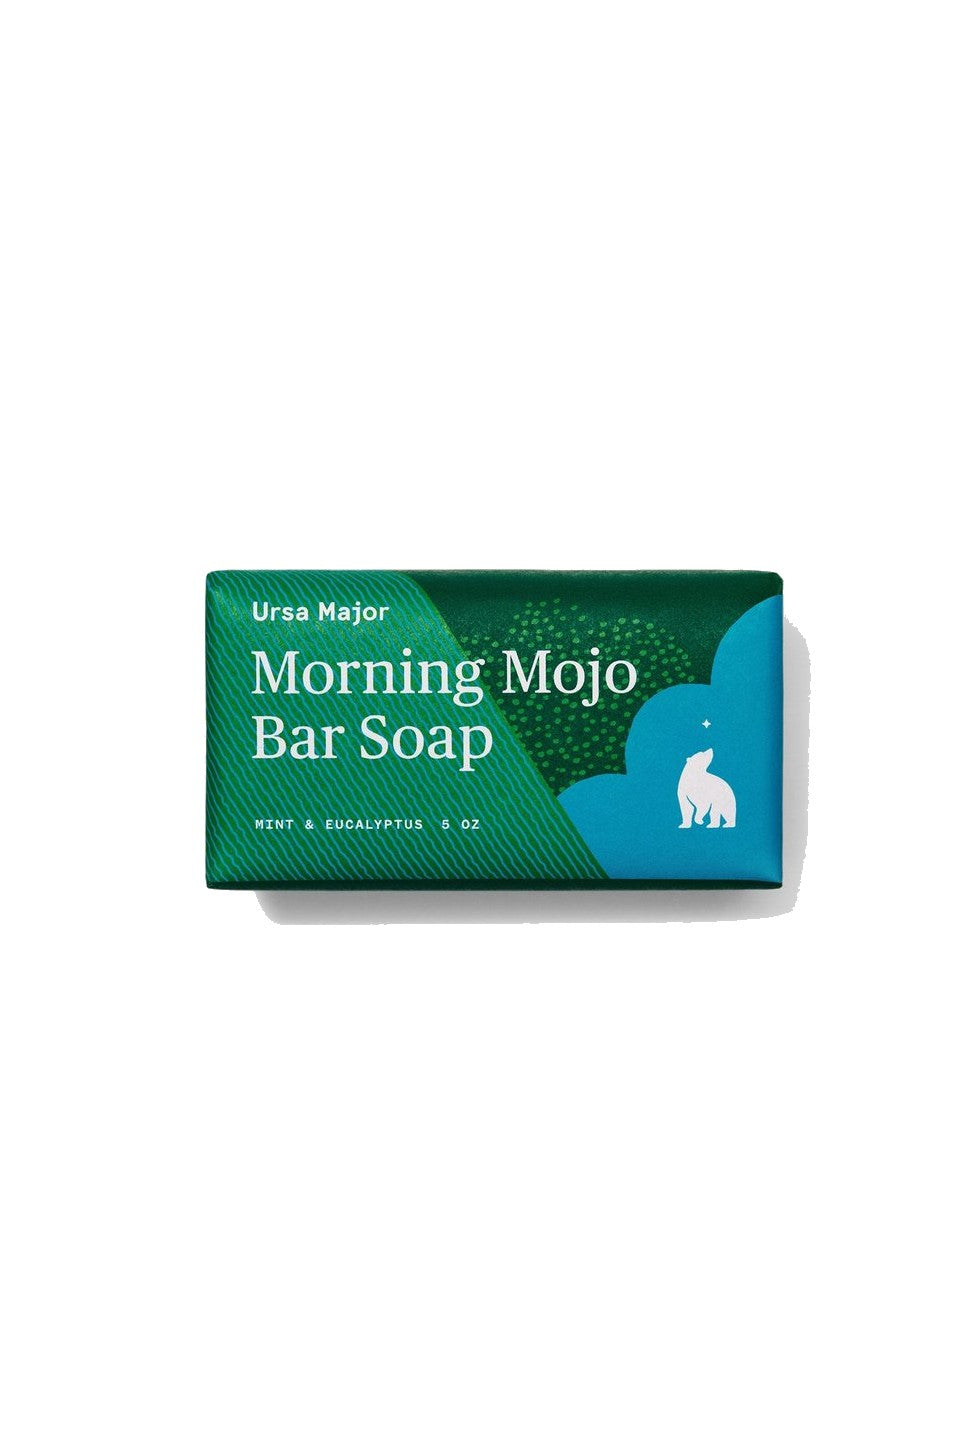 Ursa Major - Morning Mojo Soap - Package